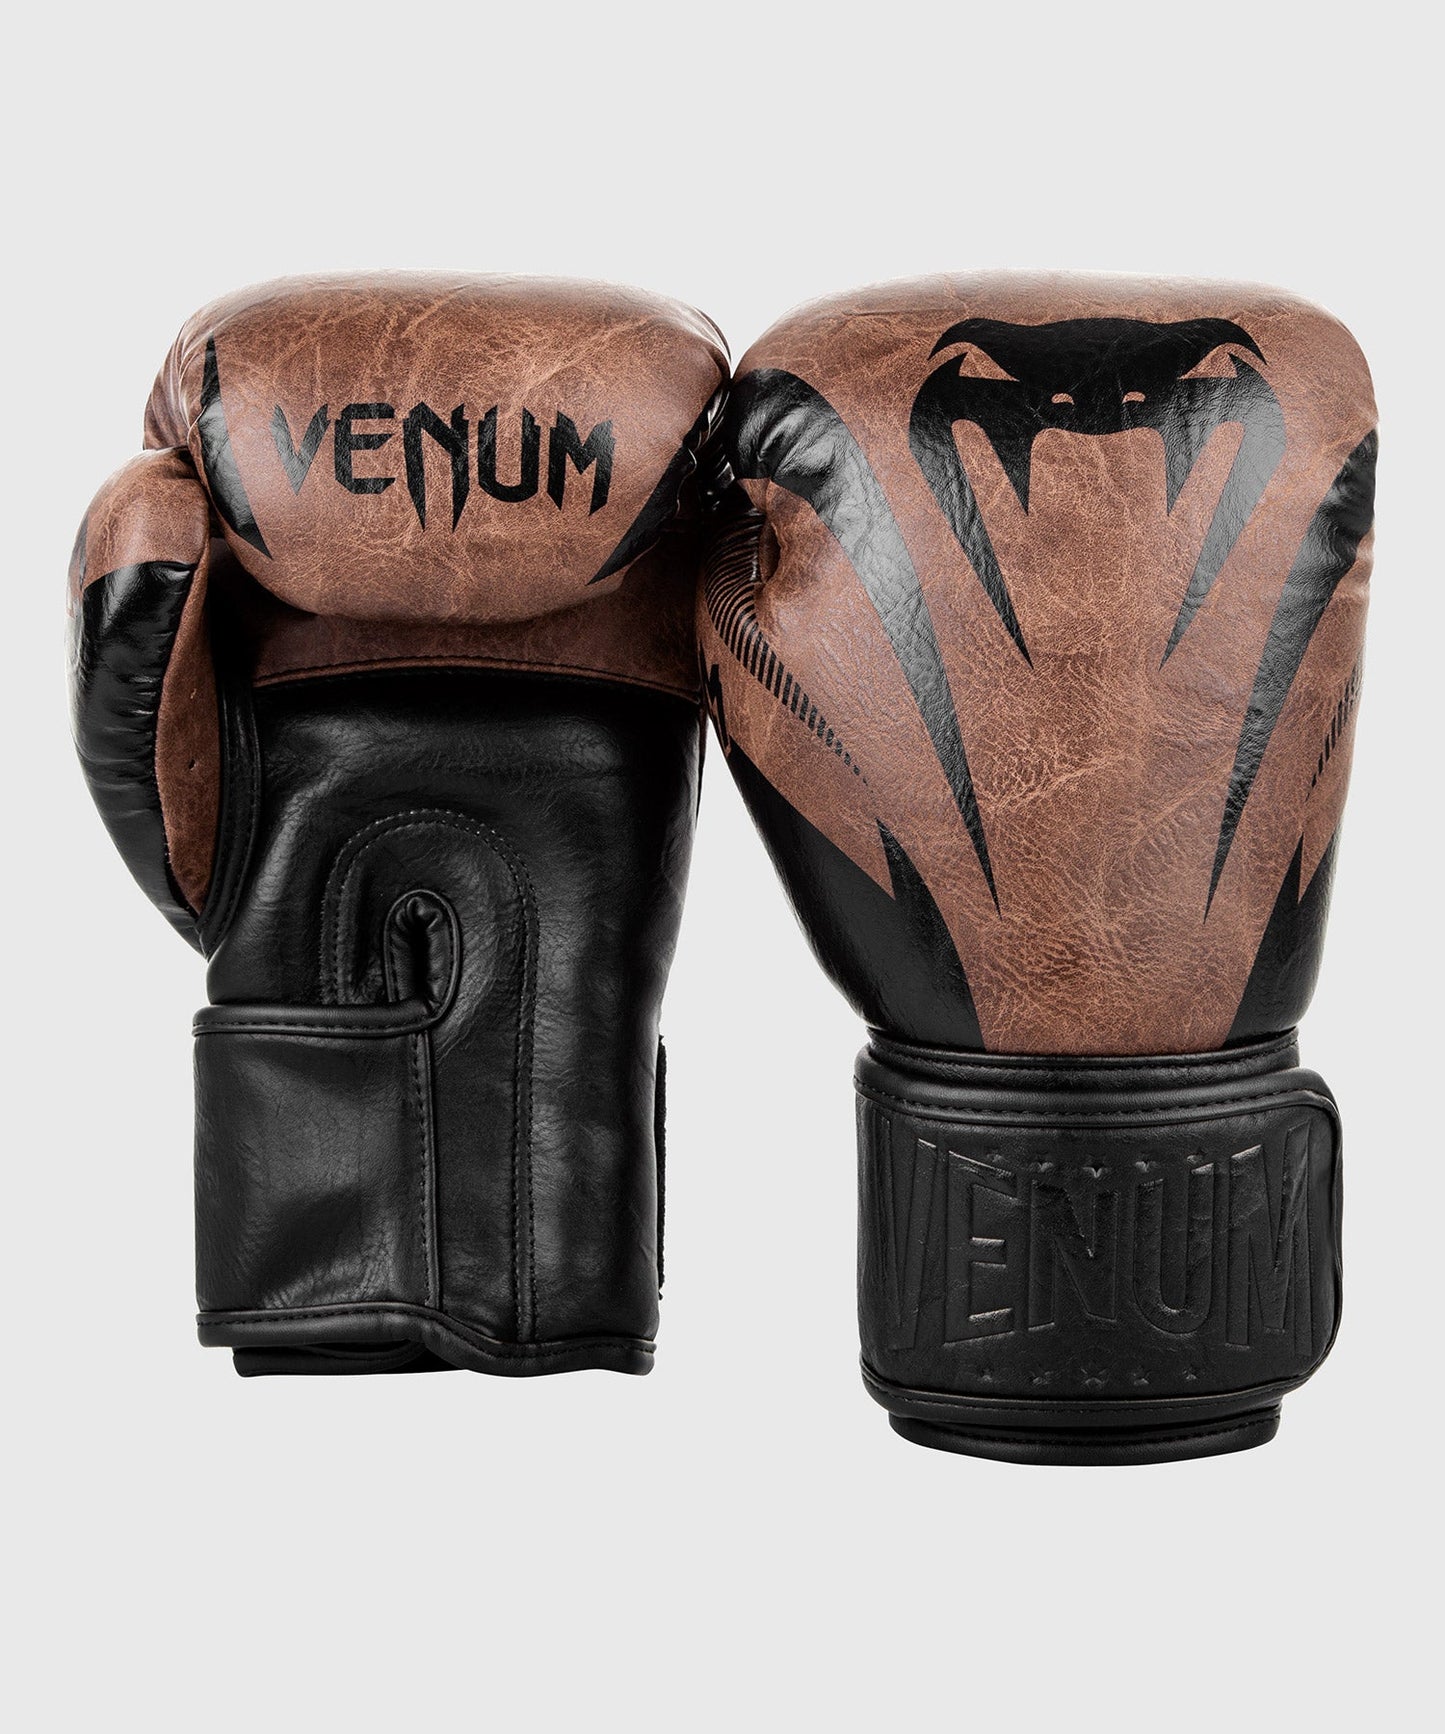 Venum Impact Boxing Gloves - Black/Brown